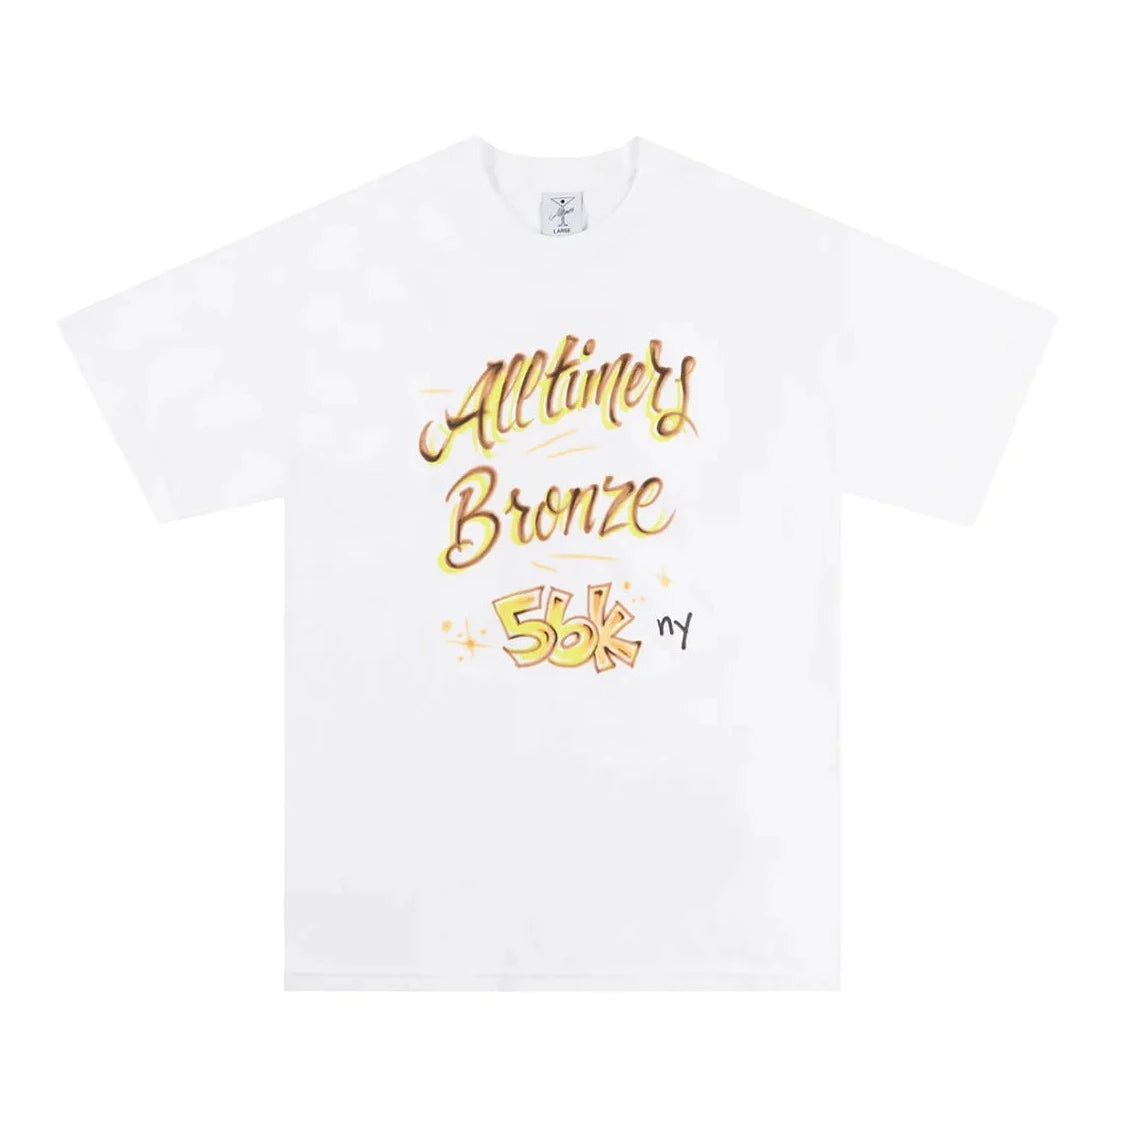 Alltimers x Bronze 56k - Lounge Tee White